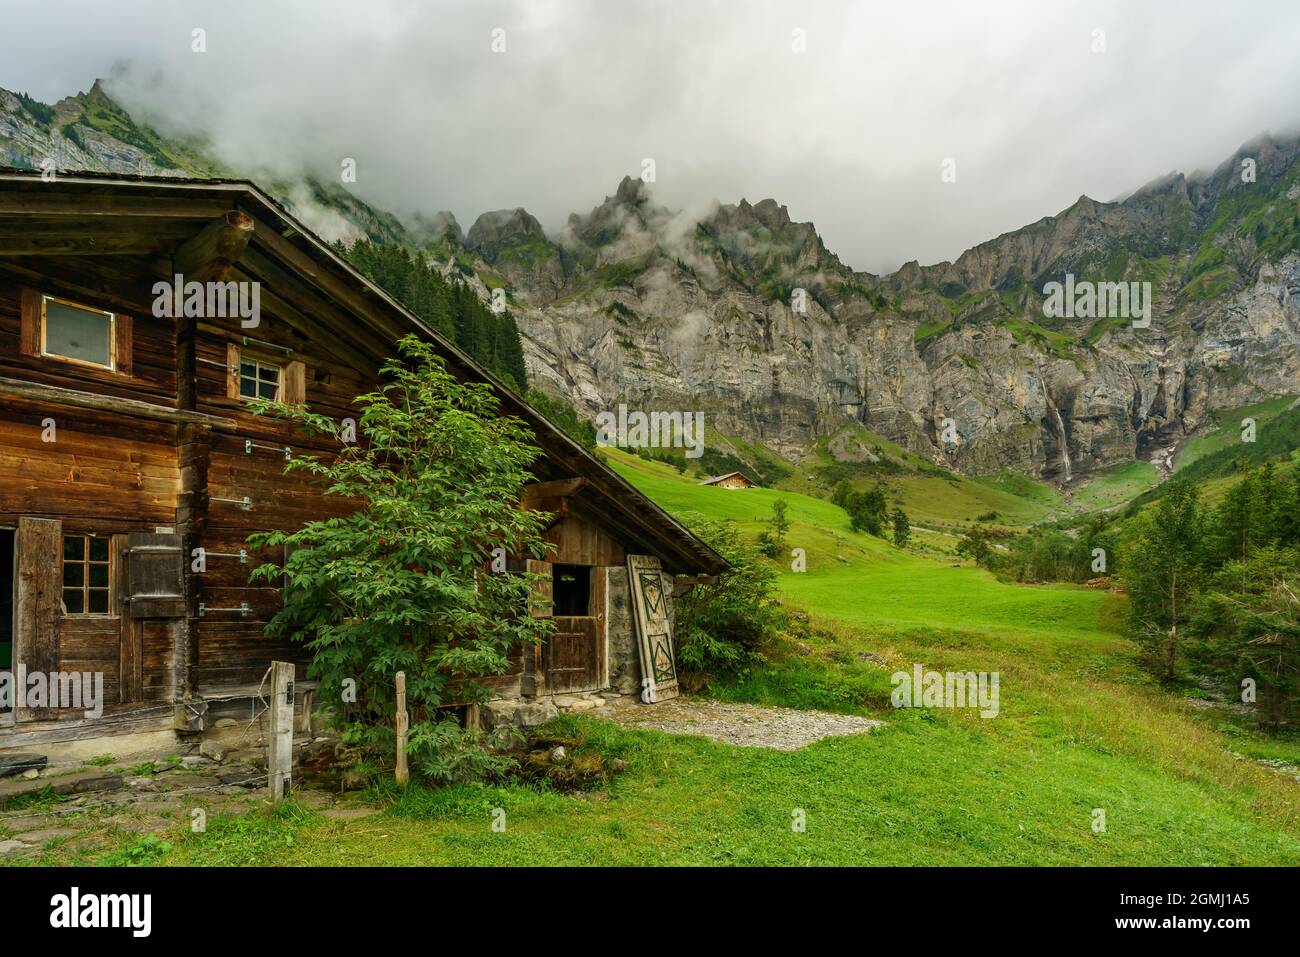 Alphütten ad Adelboden, Schweiz. Fattoria alpina boscosa su prato verde su ripido pendio nella valle di Adelboden. Landschaft im Berner Oberland Foto Stock